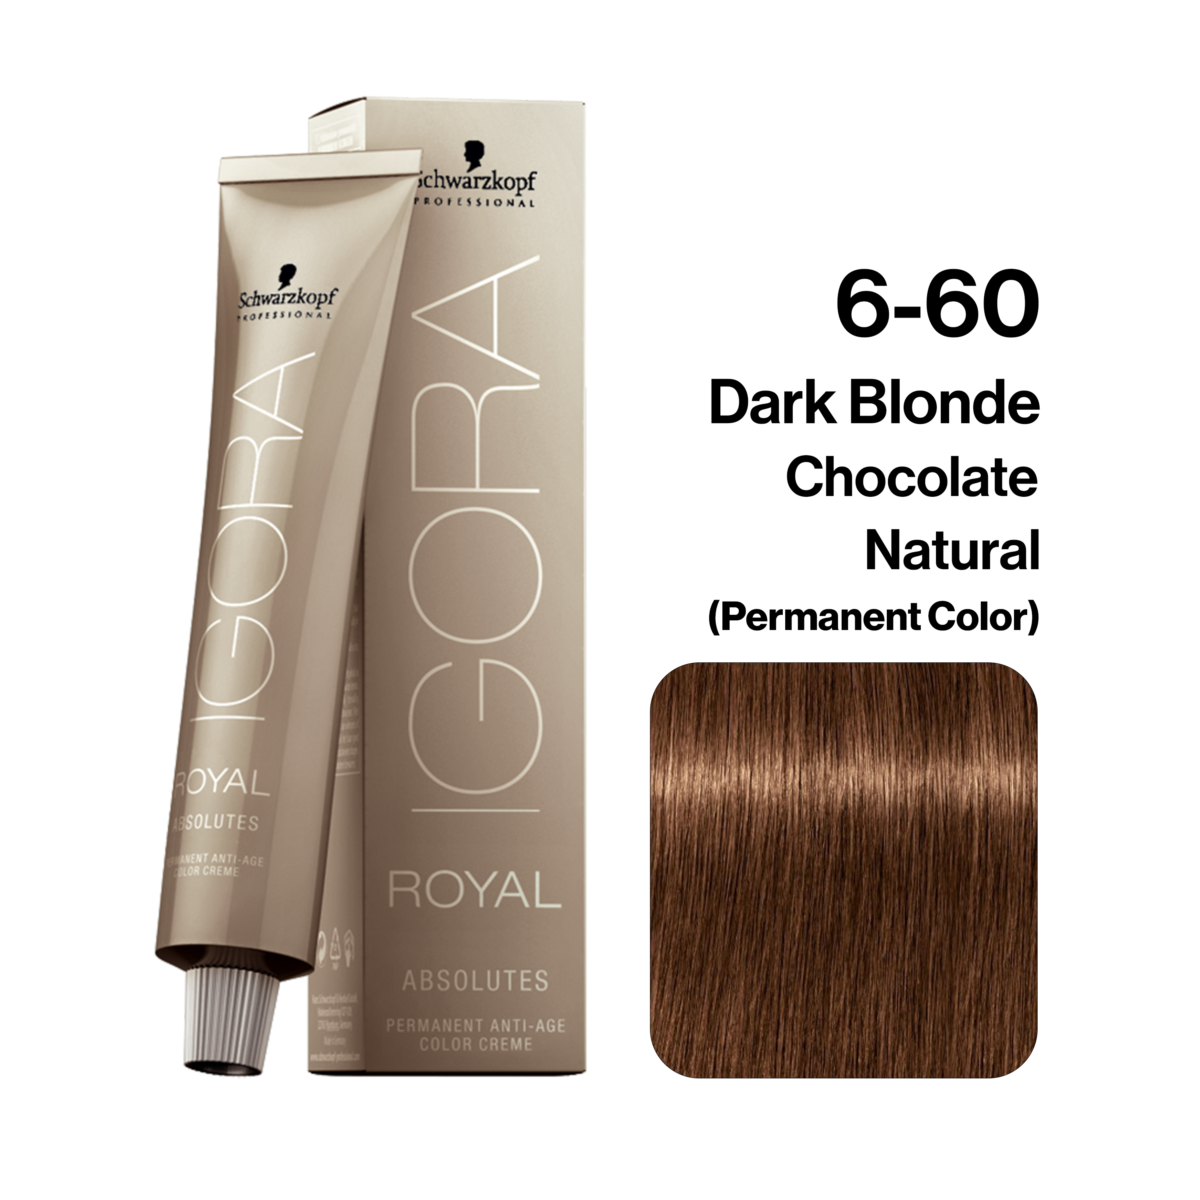 Schwarzkopf Igora Royal Absolutes Hair Color, 6-60 Dark Blonde Chocolate Natural 60ml